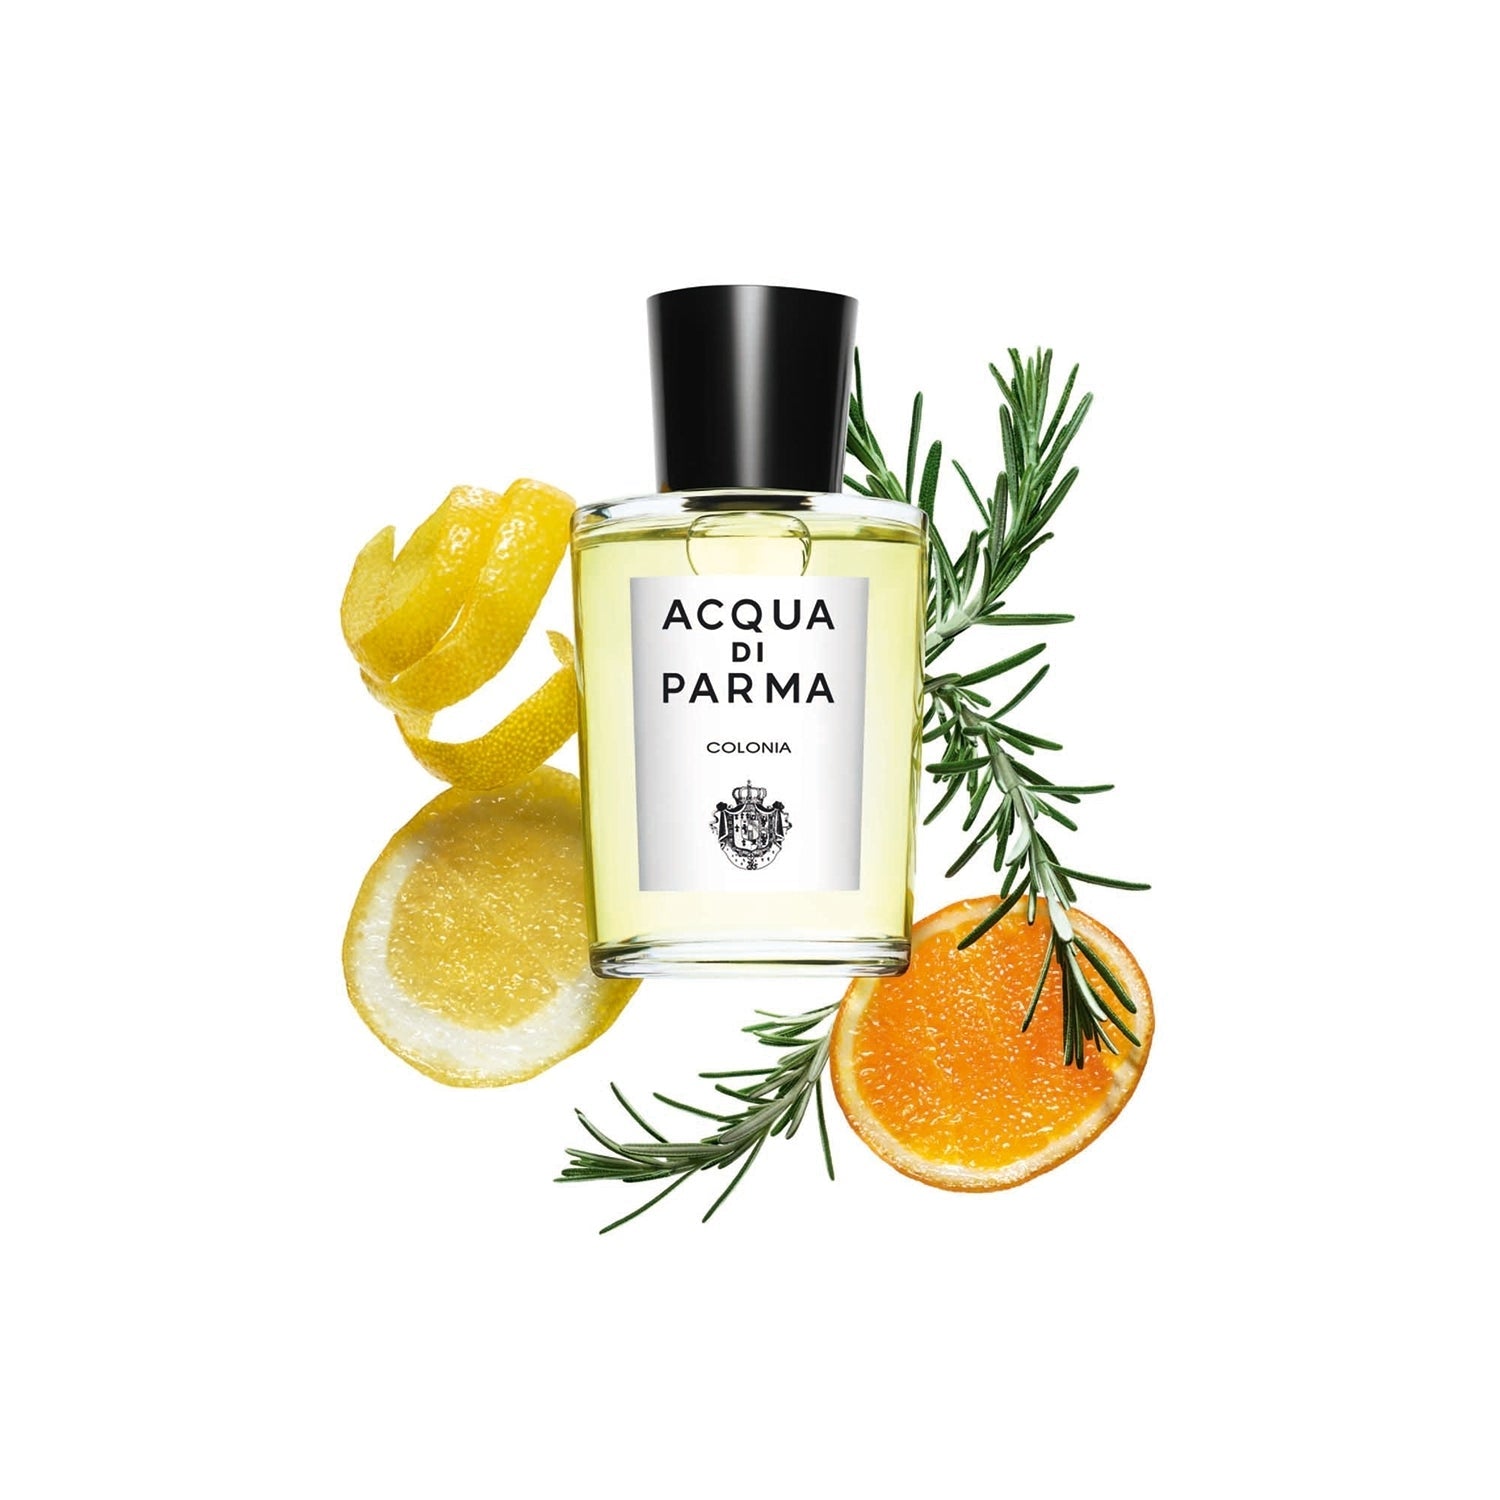 Acqua Di Parma Colonia Shower Gel Set | My Perfume Shop Australia